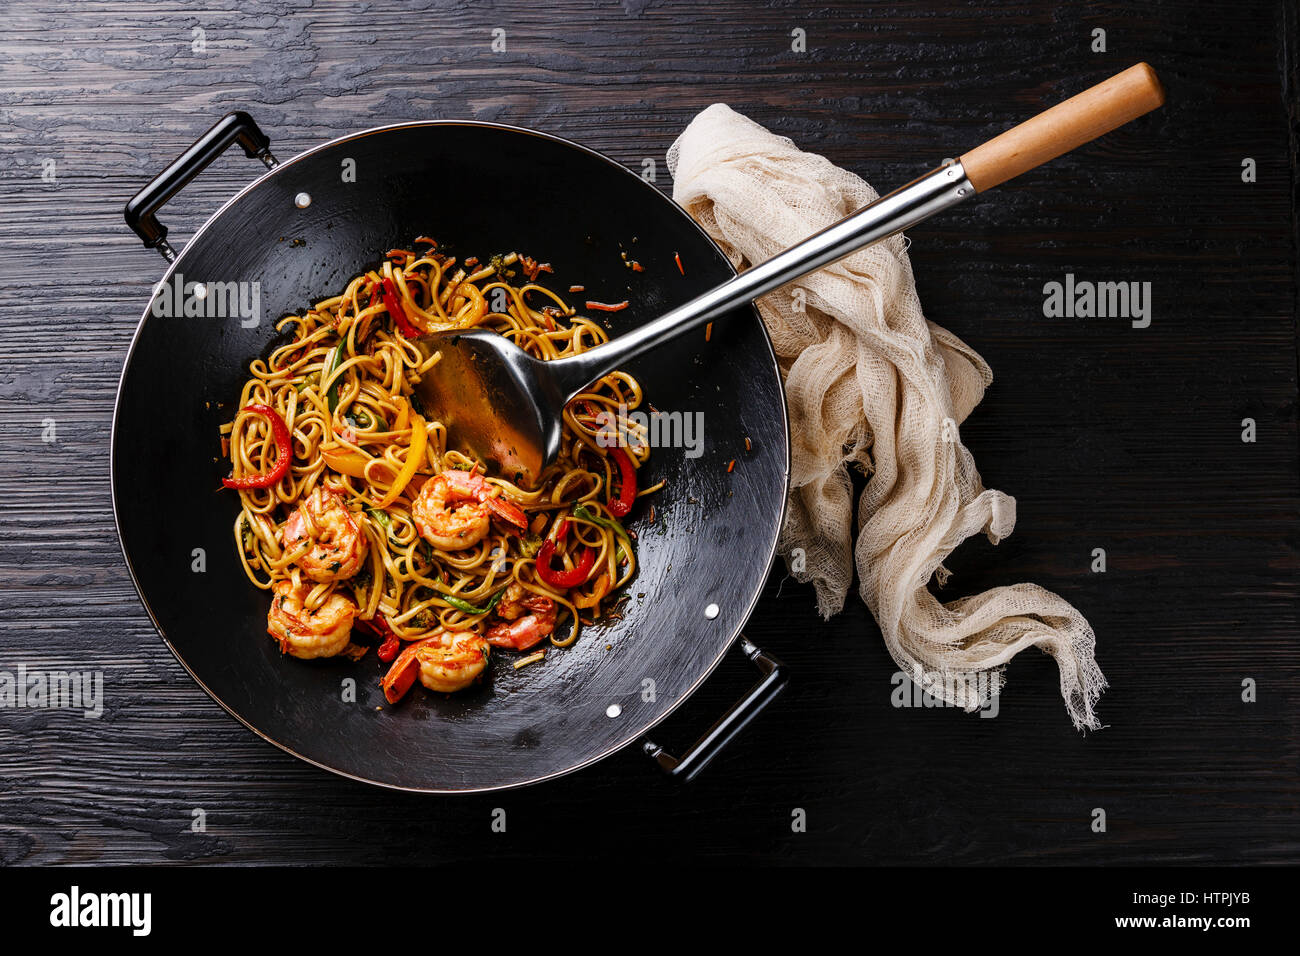 Udon stir fry noodles with prawn shrimp and vegetables in wok pan on black burned wooden background Stock Photo